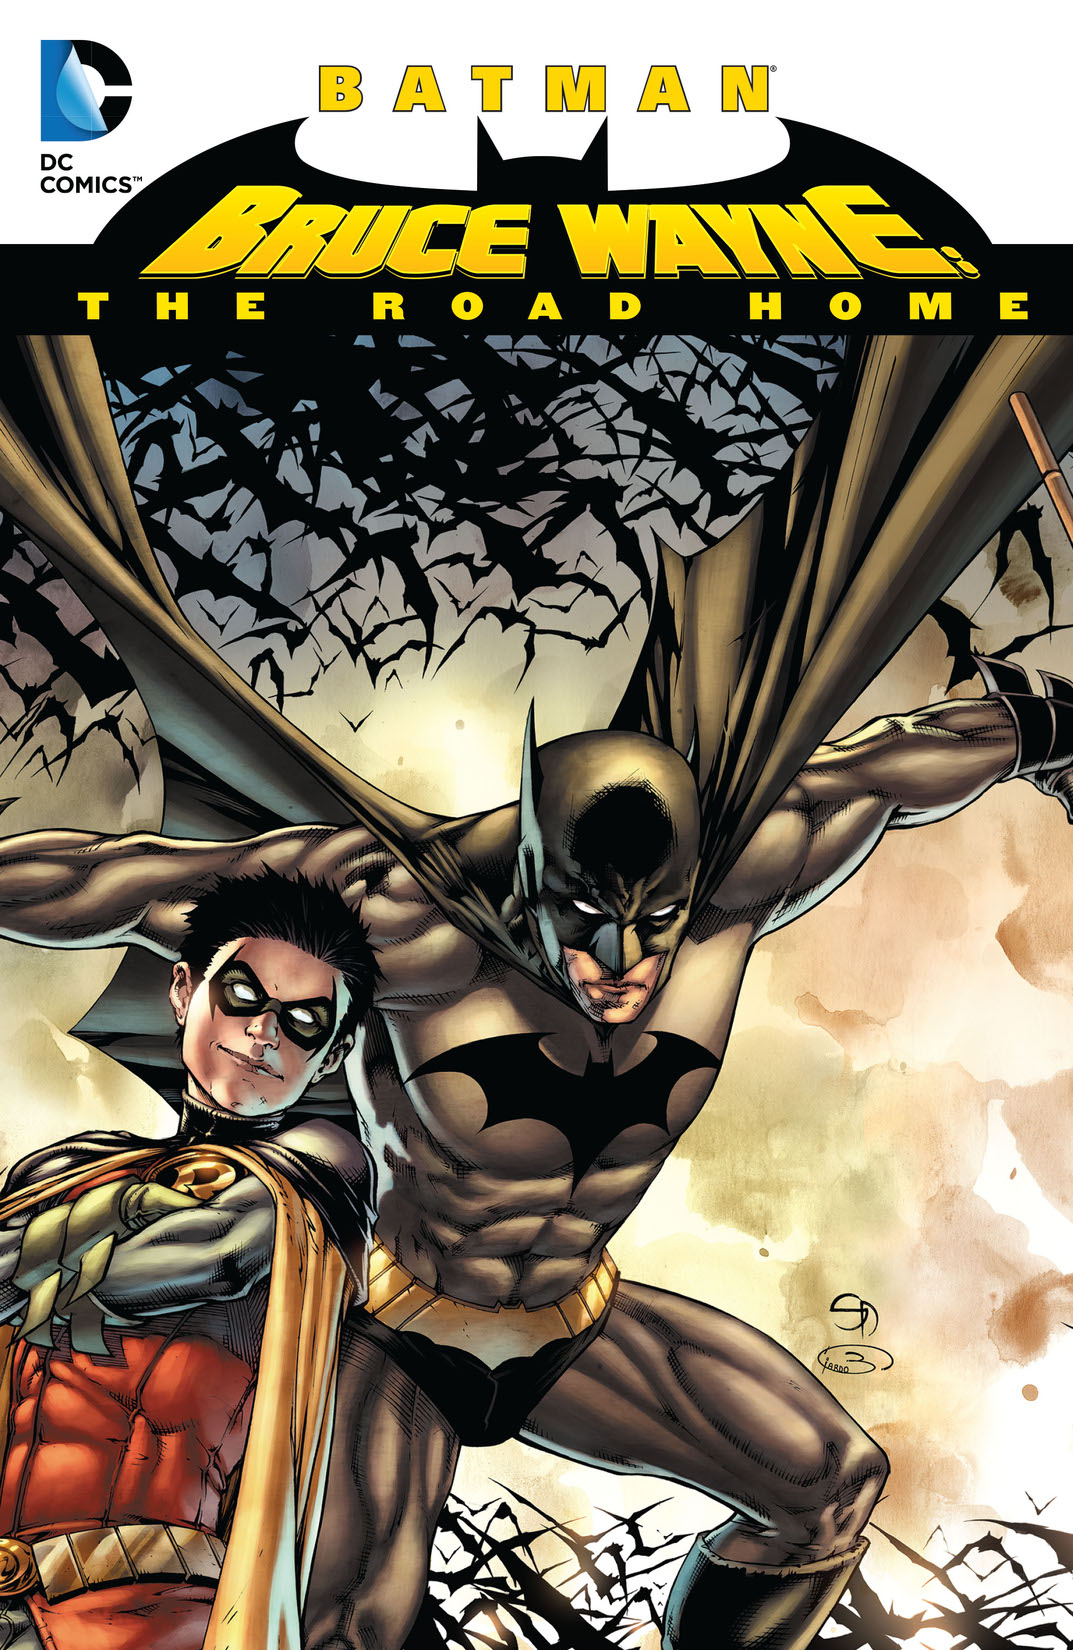 Batman: Bruce Wayne - The Road Home preview images